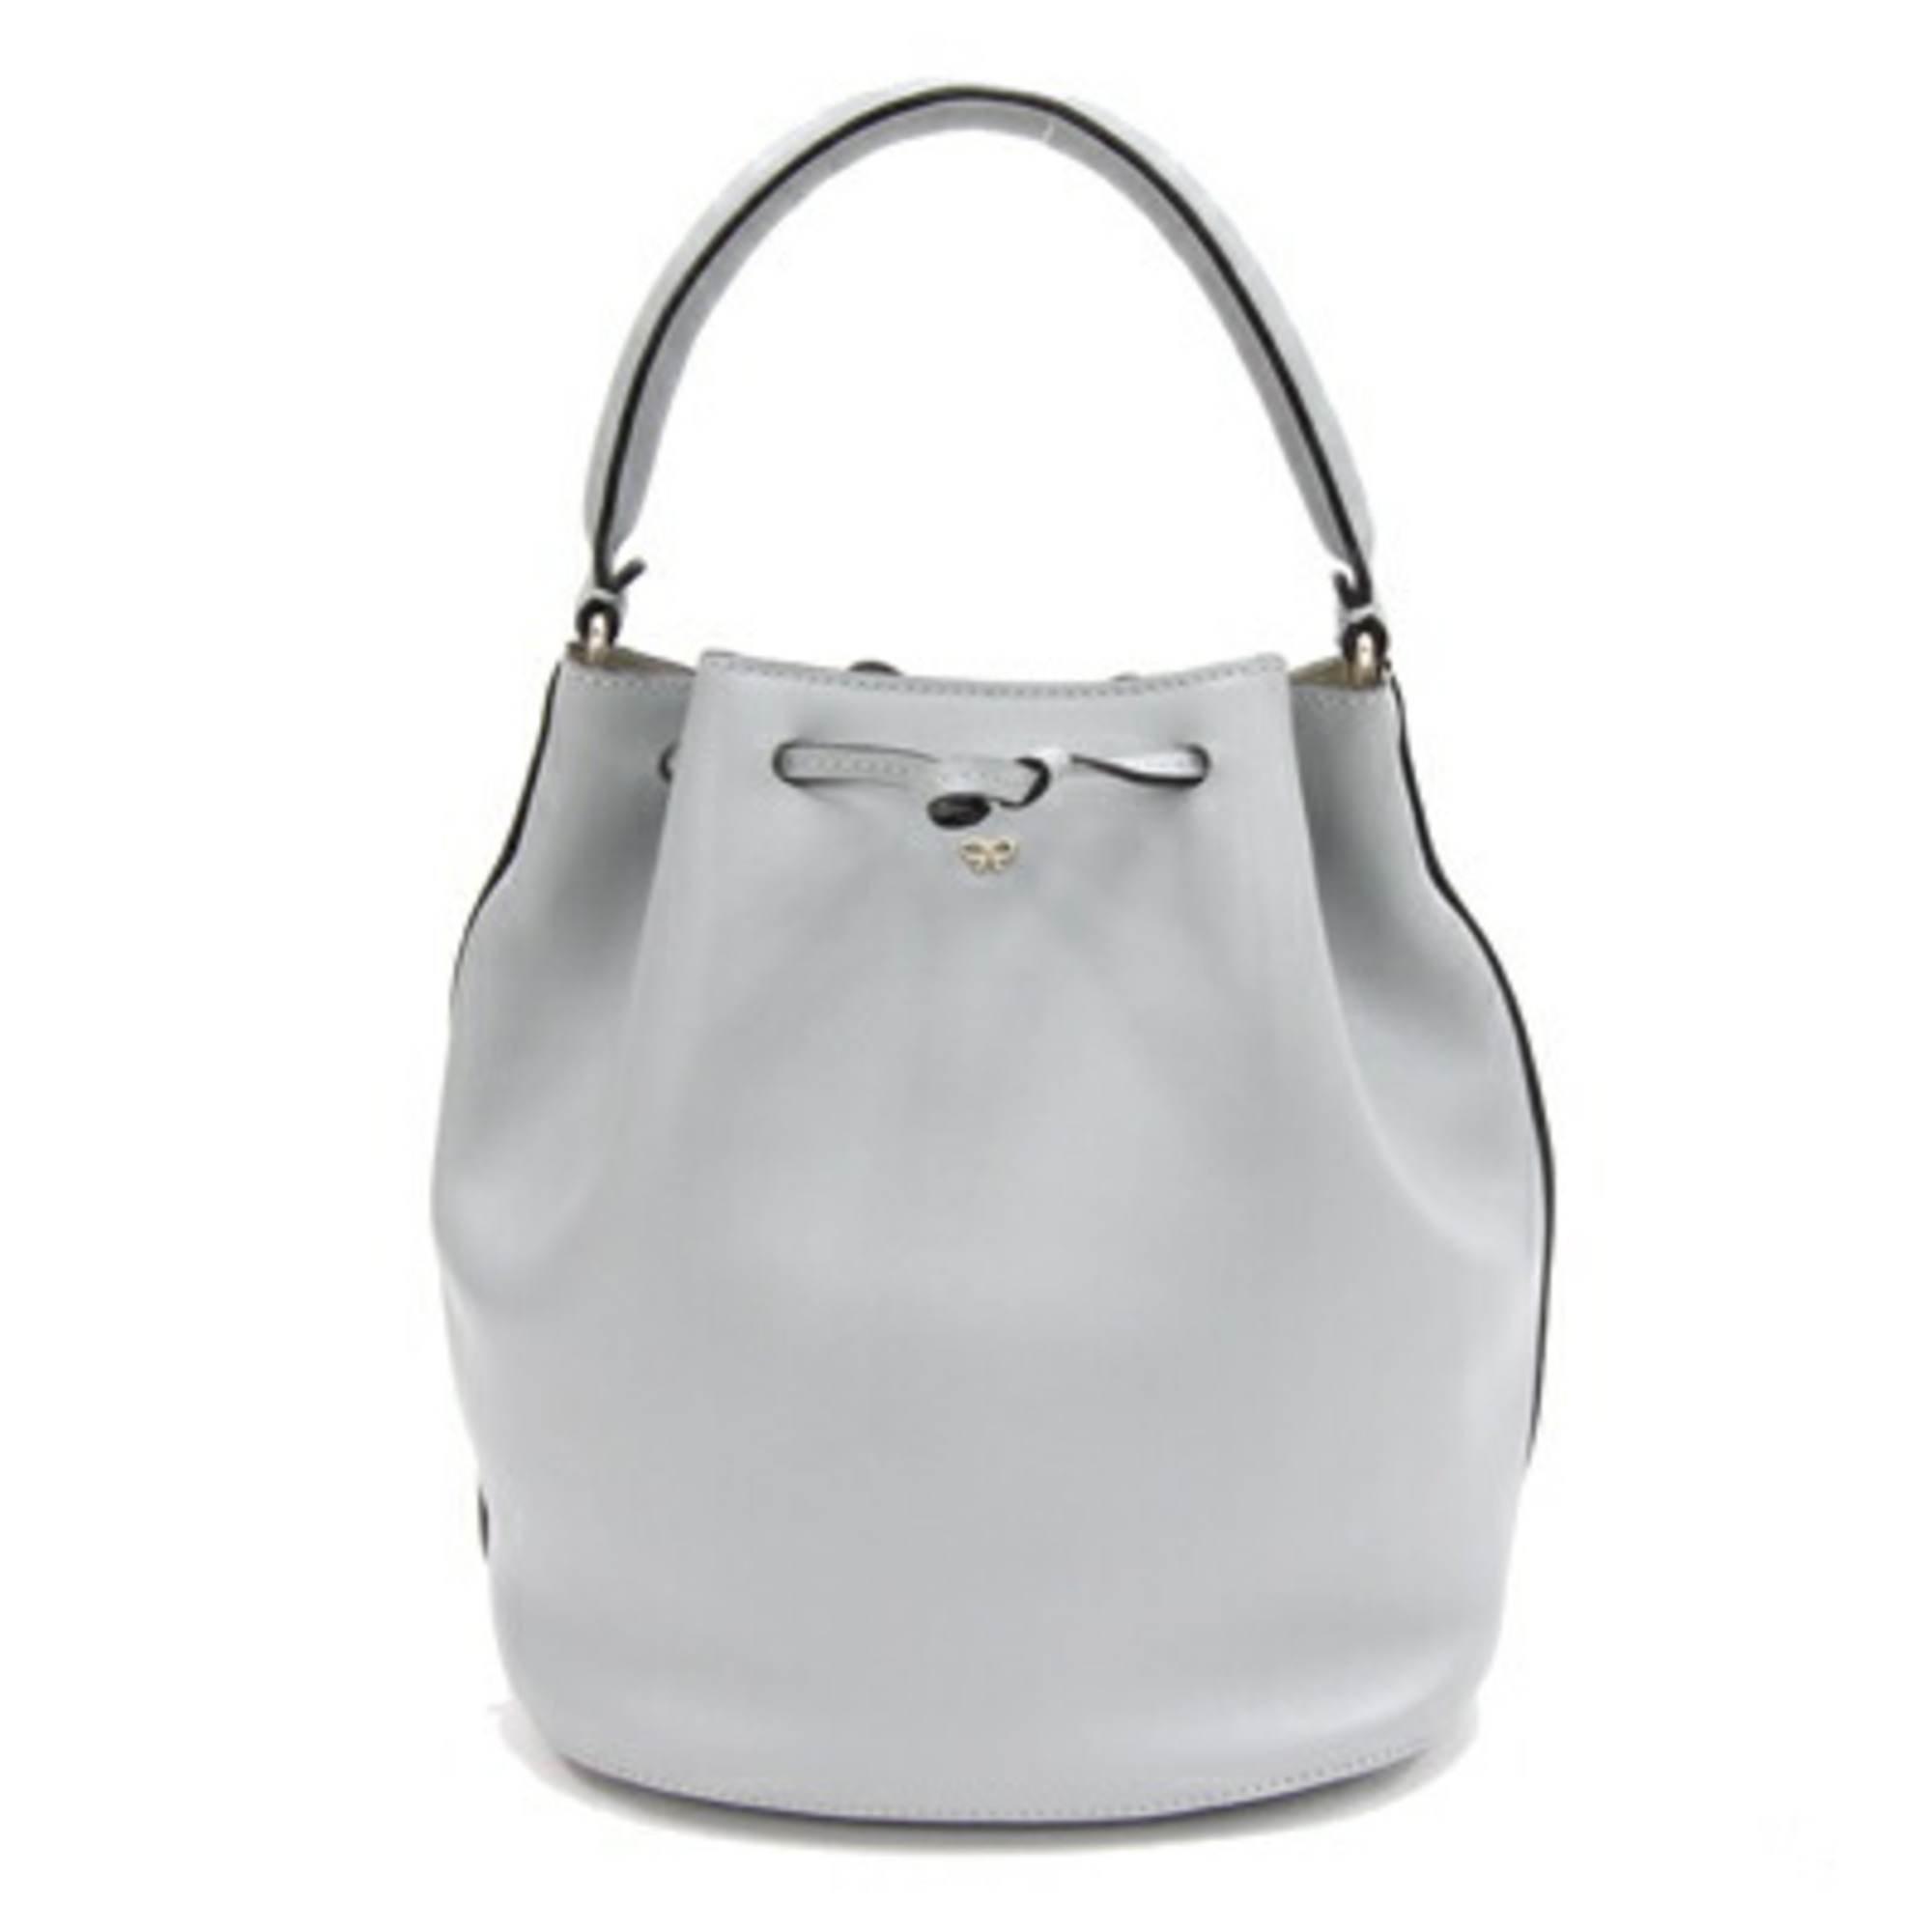 Anya Hindmarch Handbag Vaughn Light Grey Leather Shoulder Bag Tassel Women's ANYA HINDMARCH